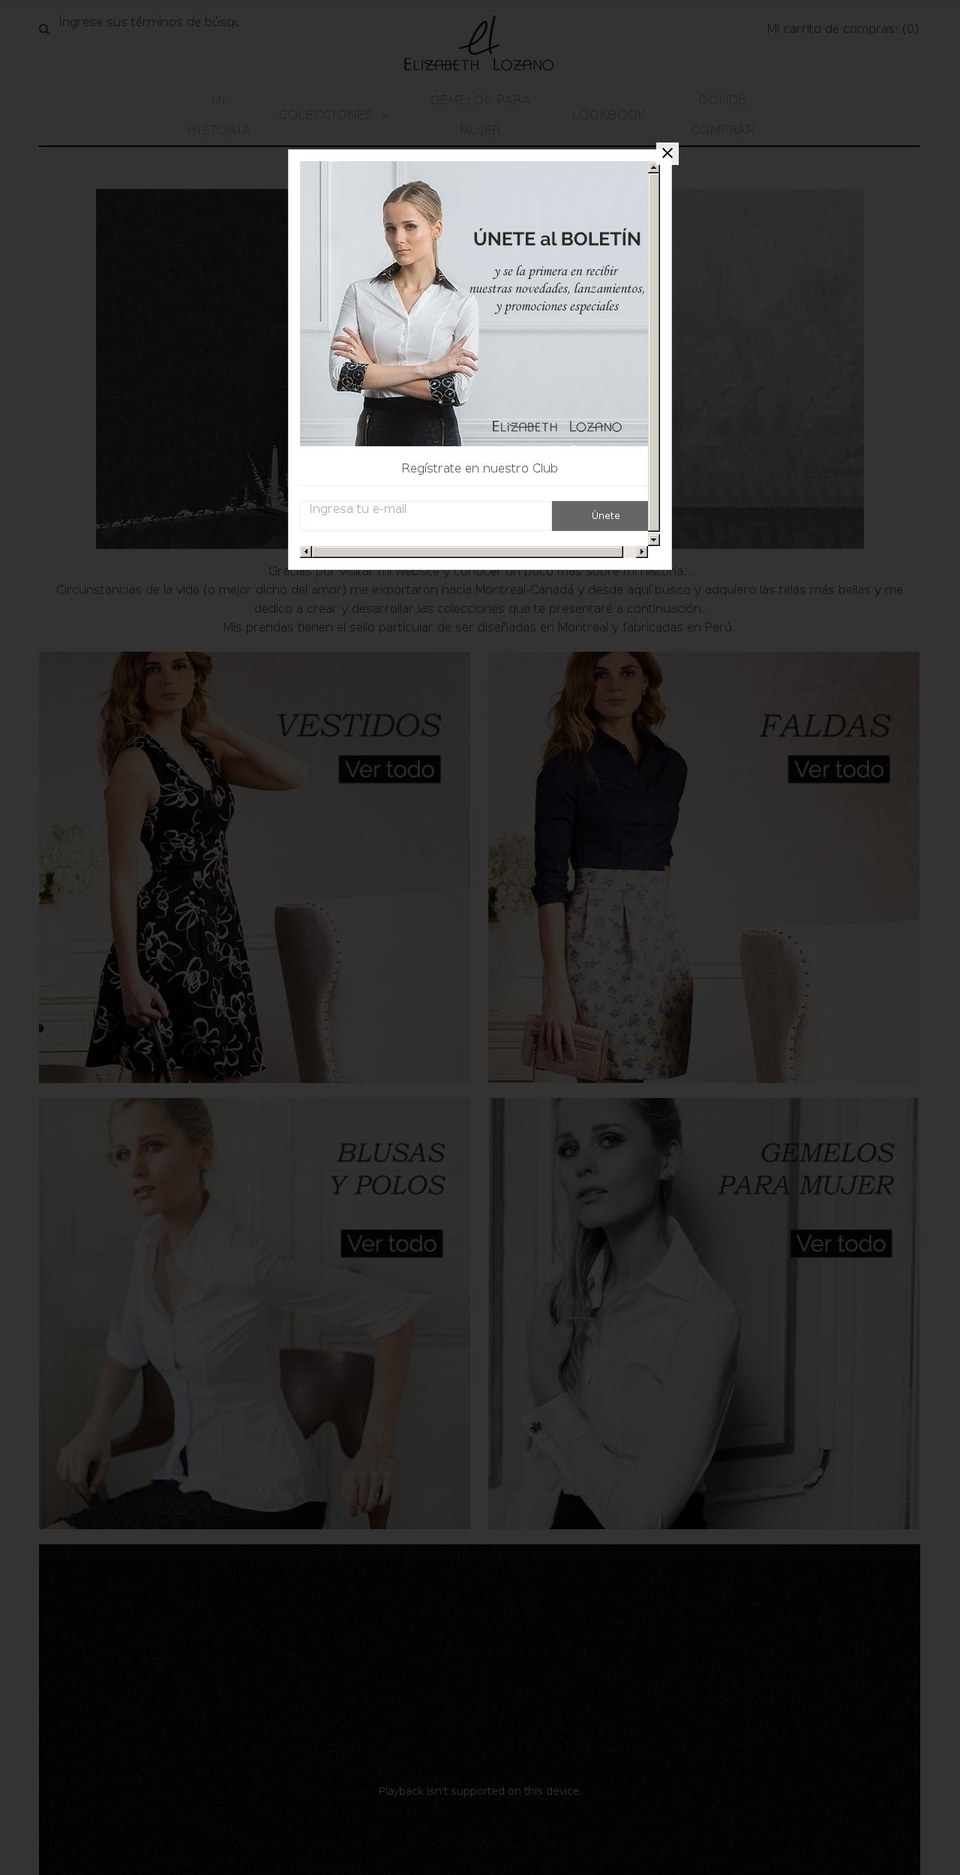 elizabethlozano.net shopify website screenshot